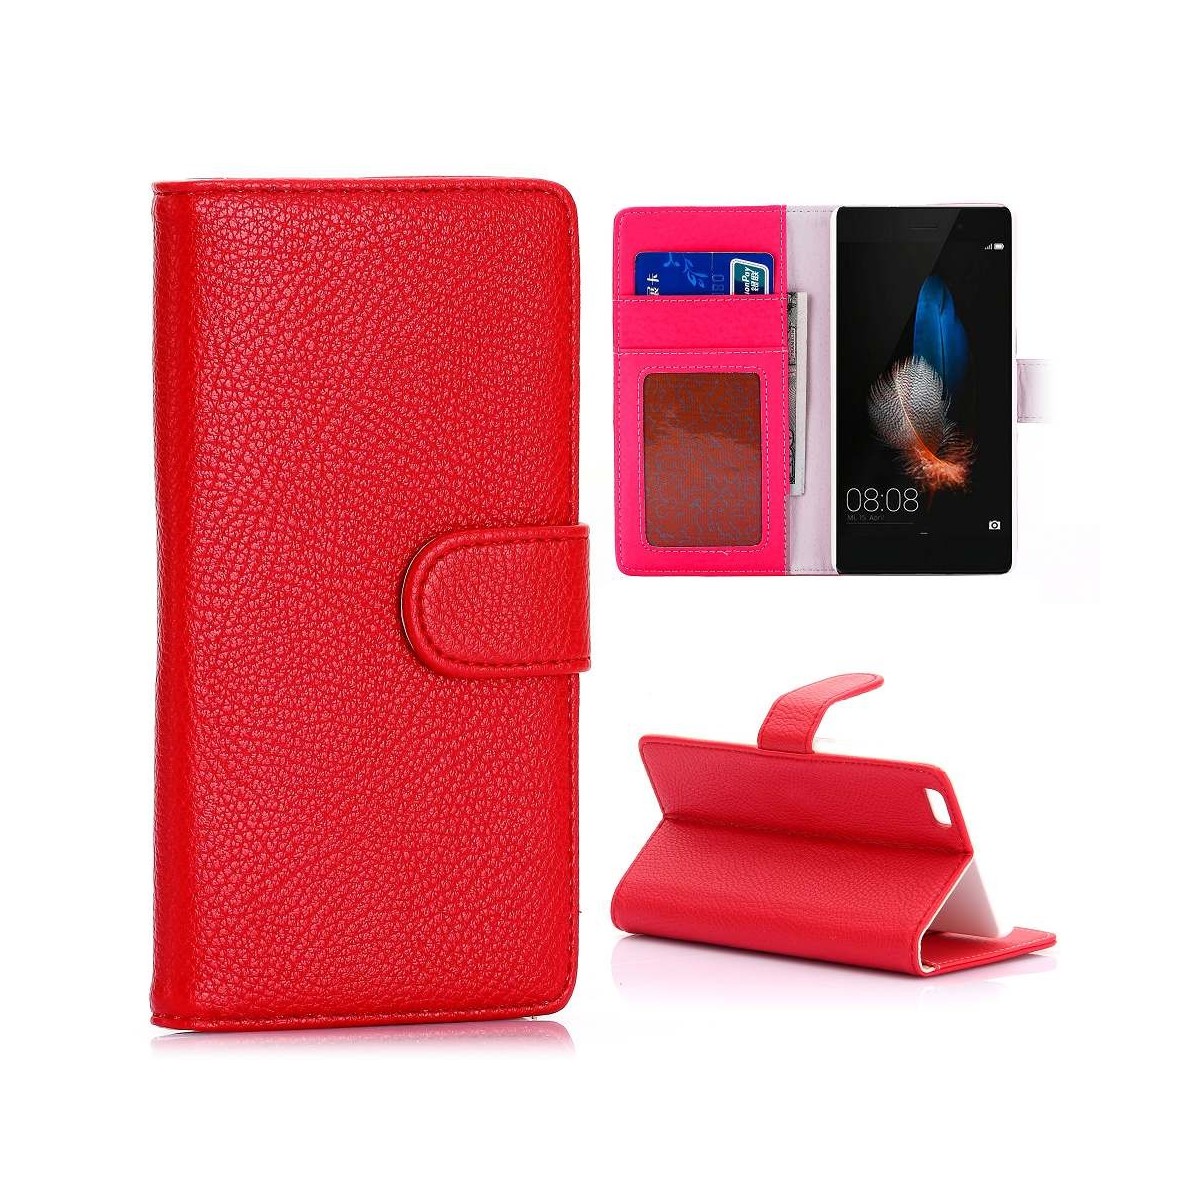 Etui Huawei P8 Lite Portecartes Rouge - Crazy Kase